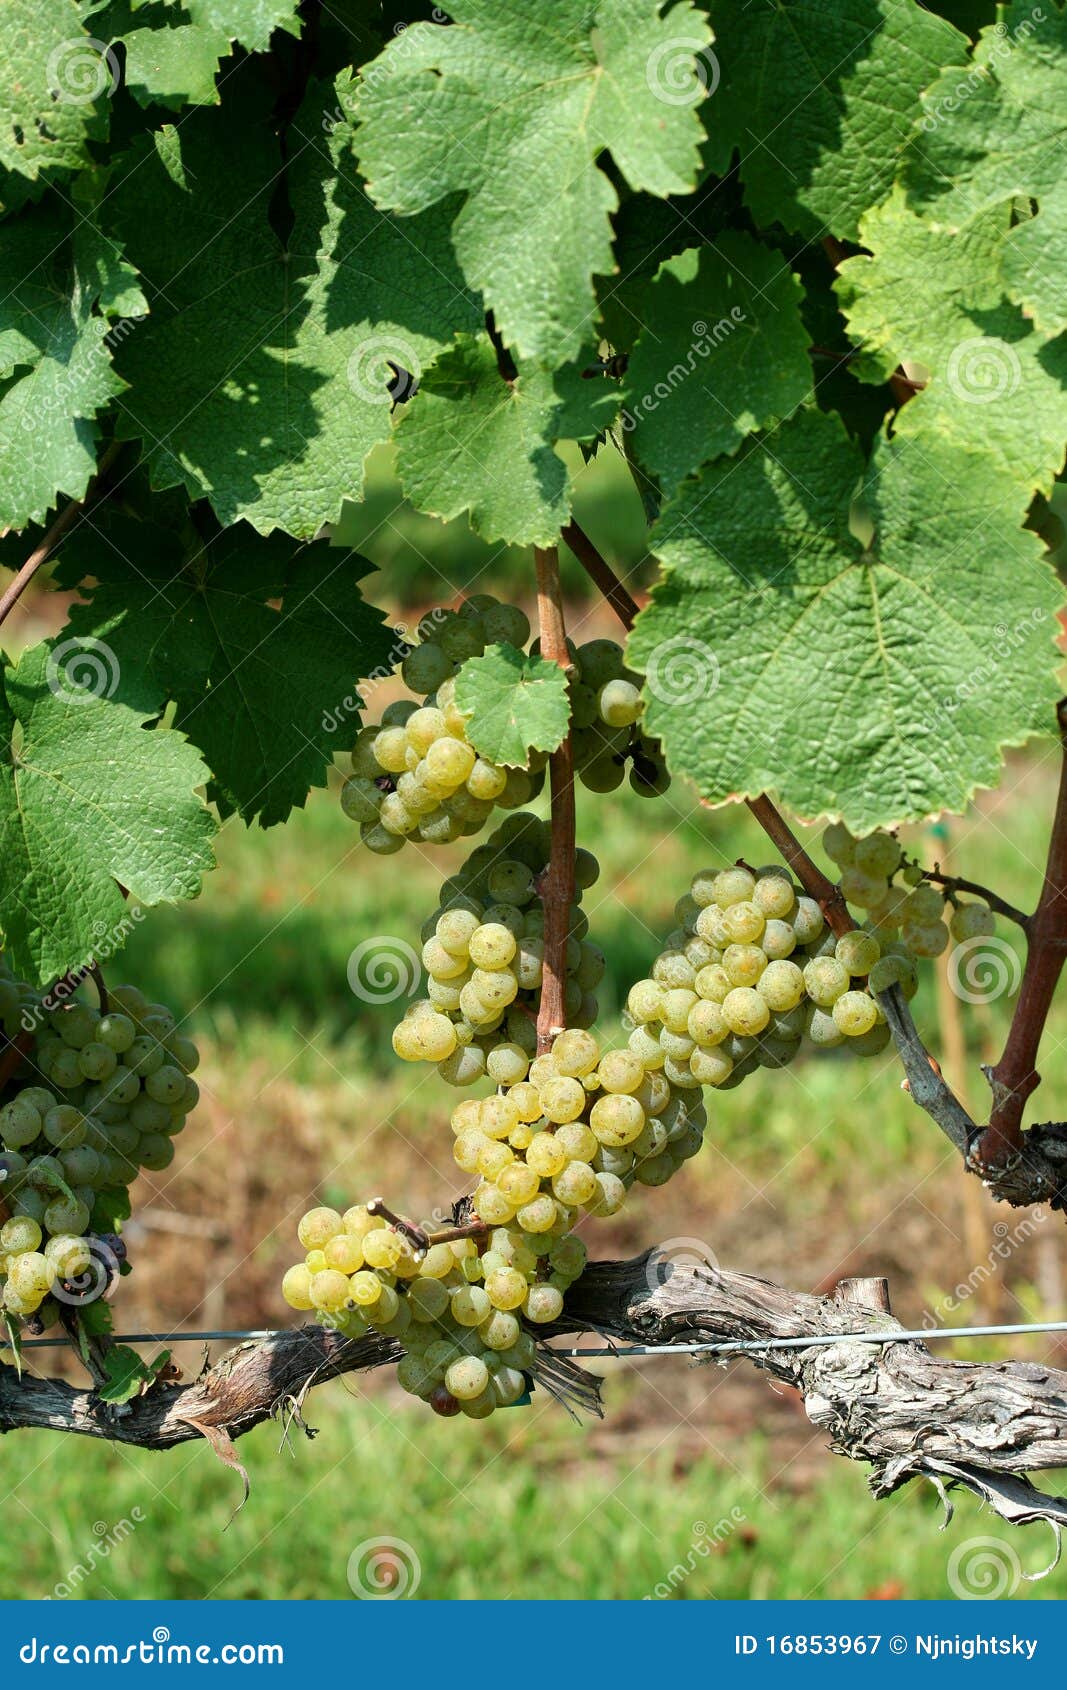 green chardonnay grapes